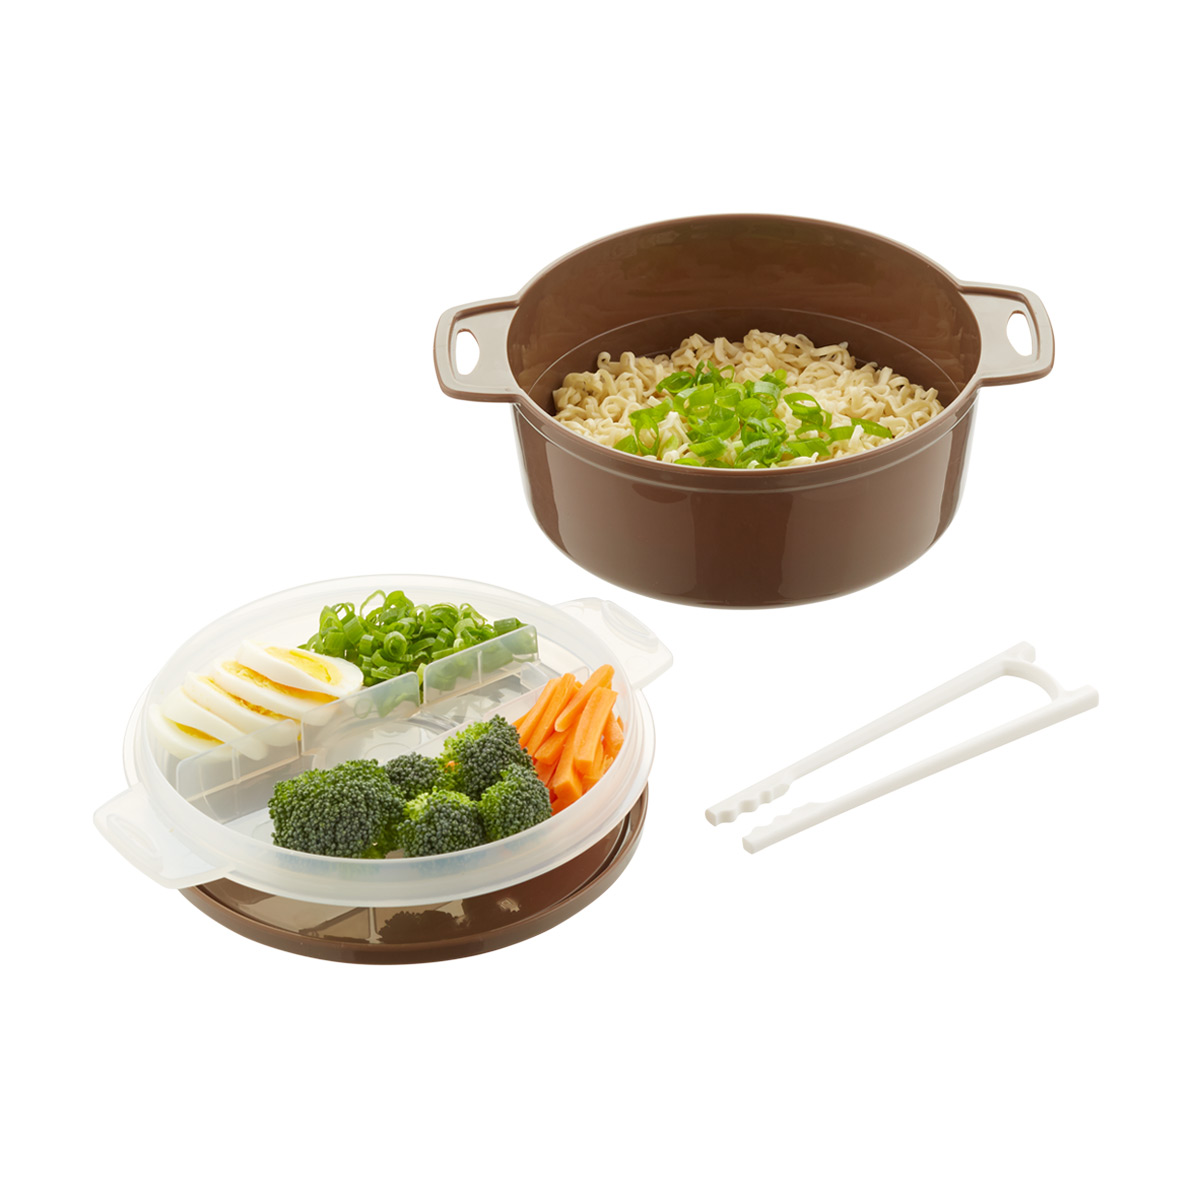 https://www.containerstore.com/catalogimages/346750/10075109-ramen-noodle-bowl.jpg